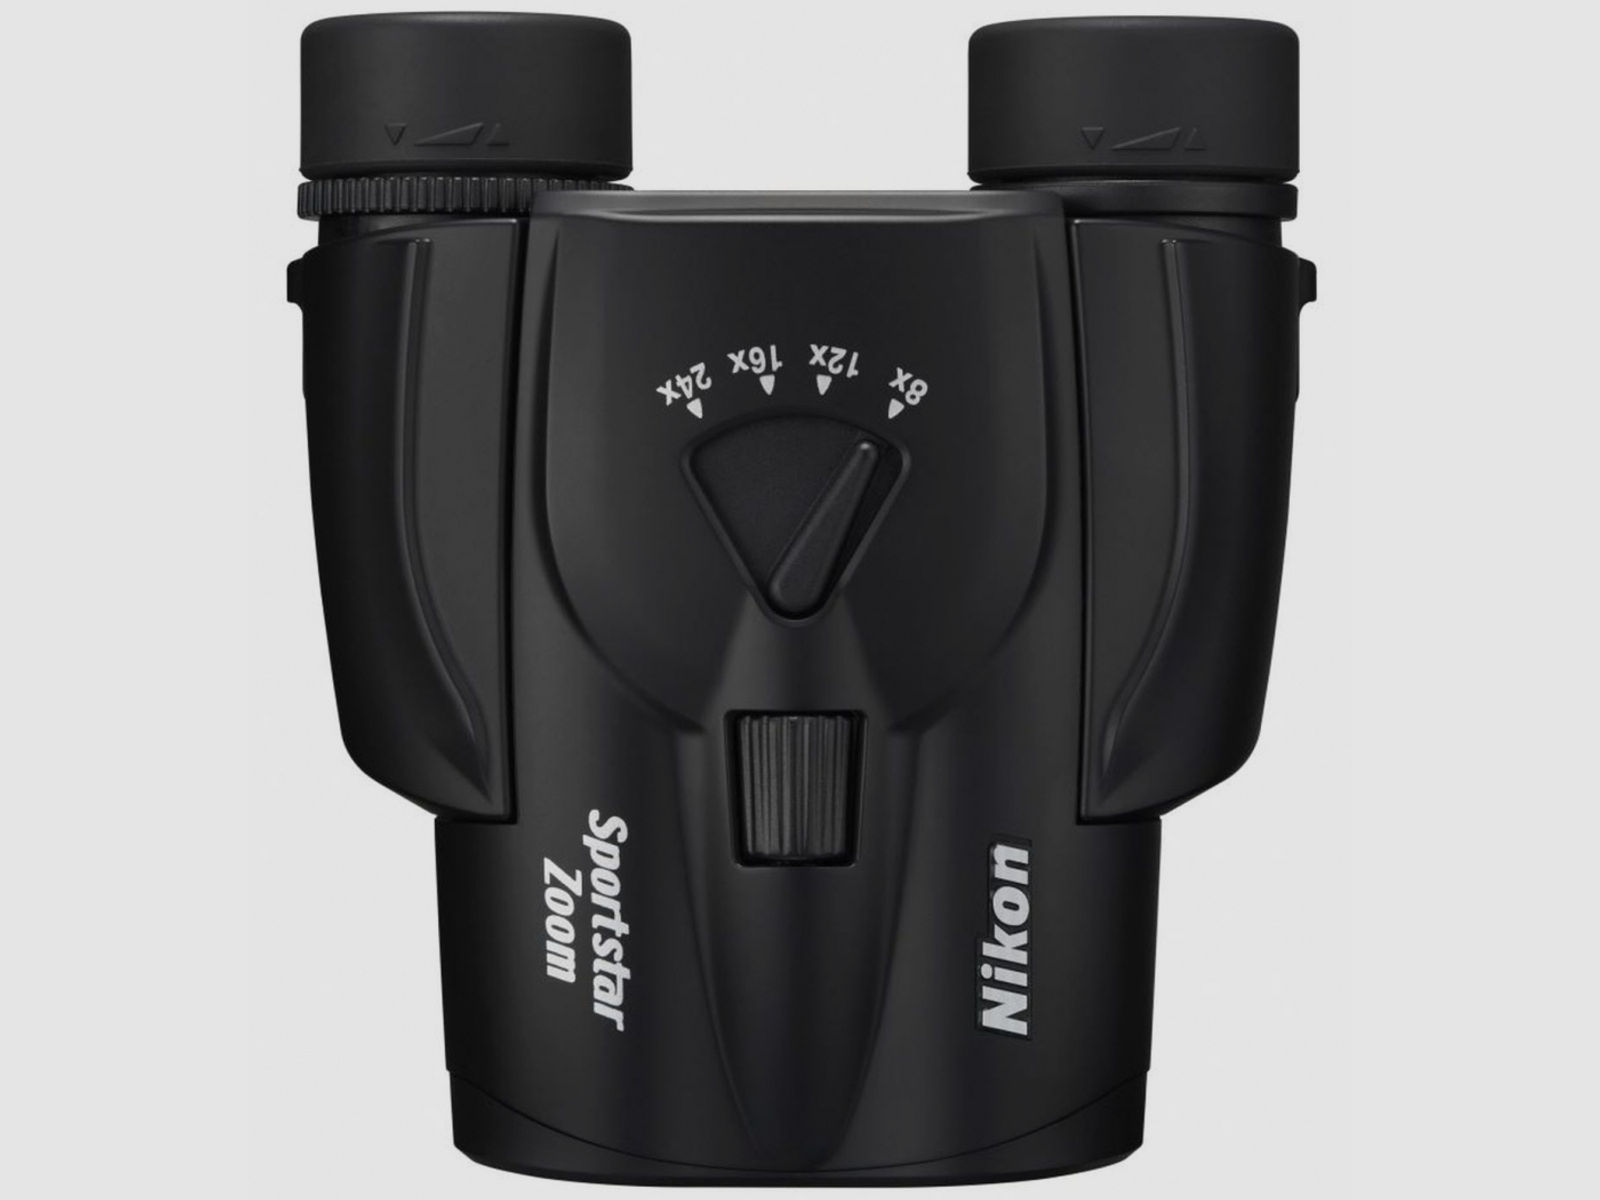 Nikon Nikon Sportstar Zoom 8-24x25 schwarz -7,00€ 5% Fernglas Rabatt 132,99 Effektivpreis